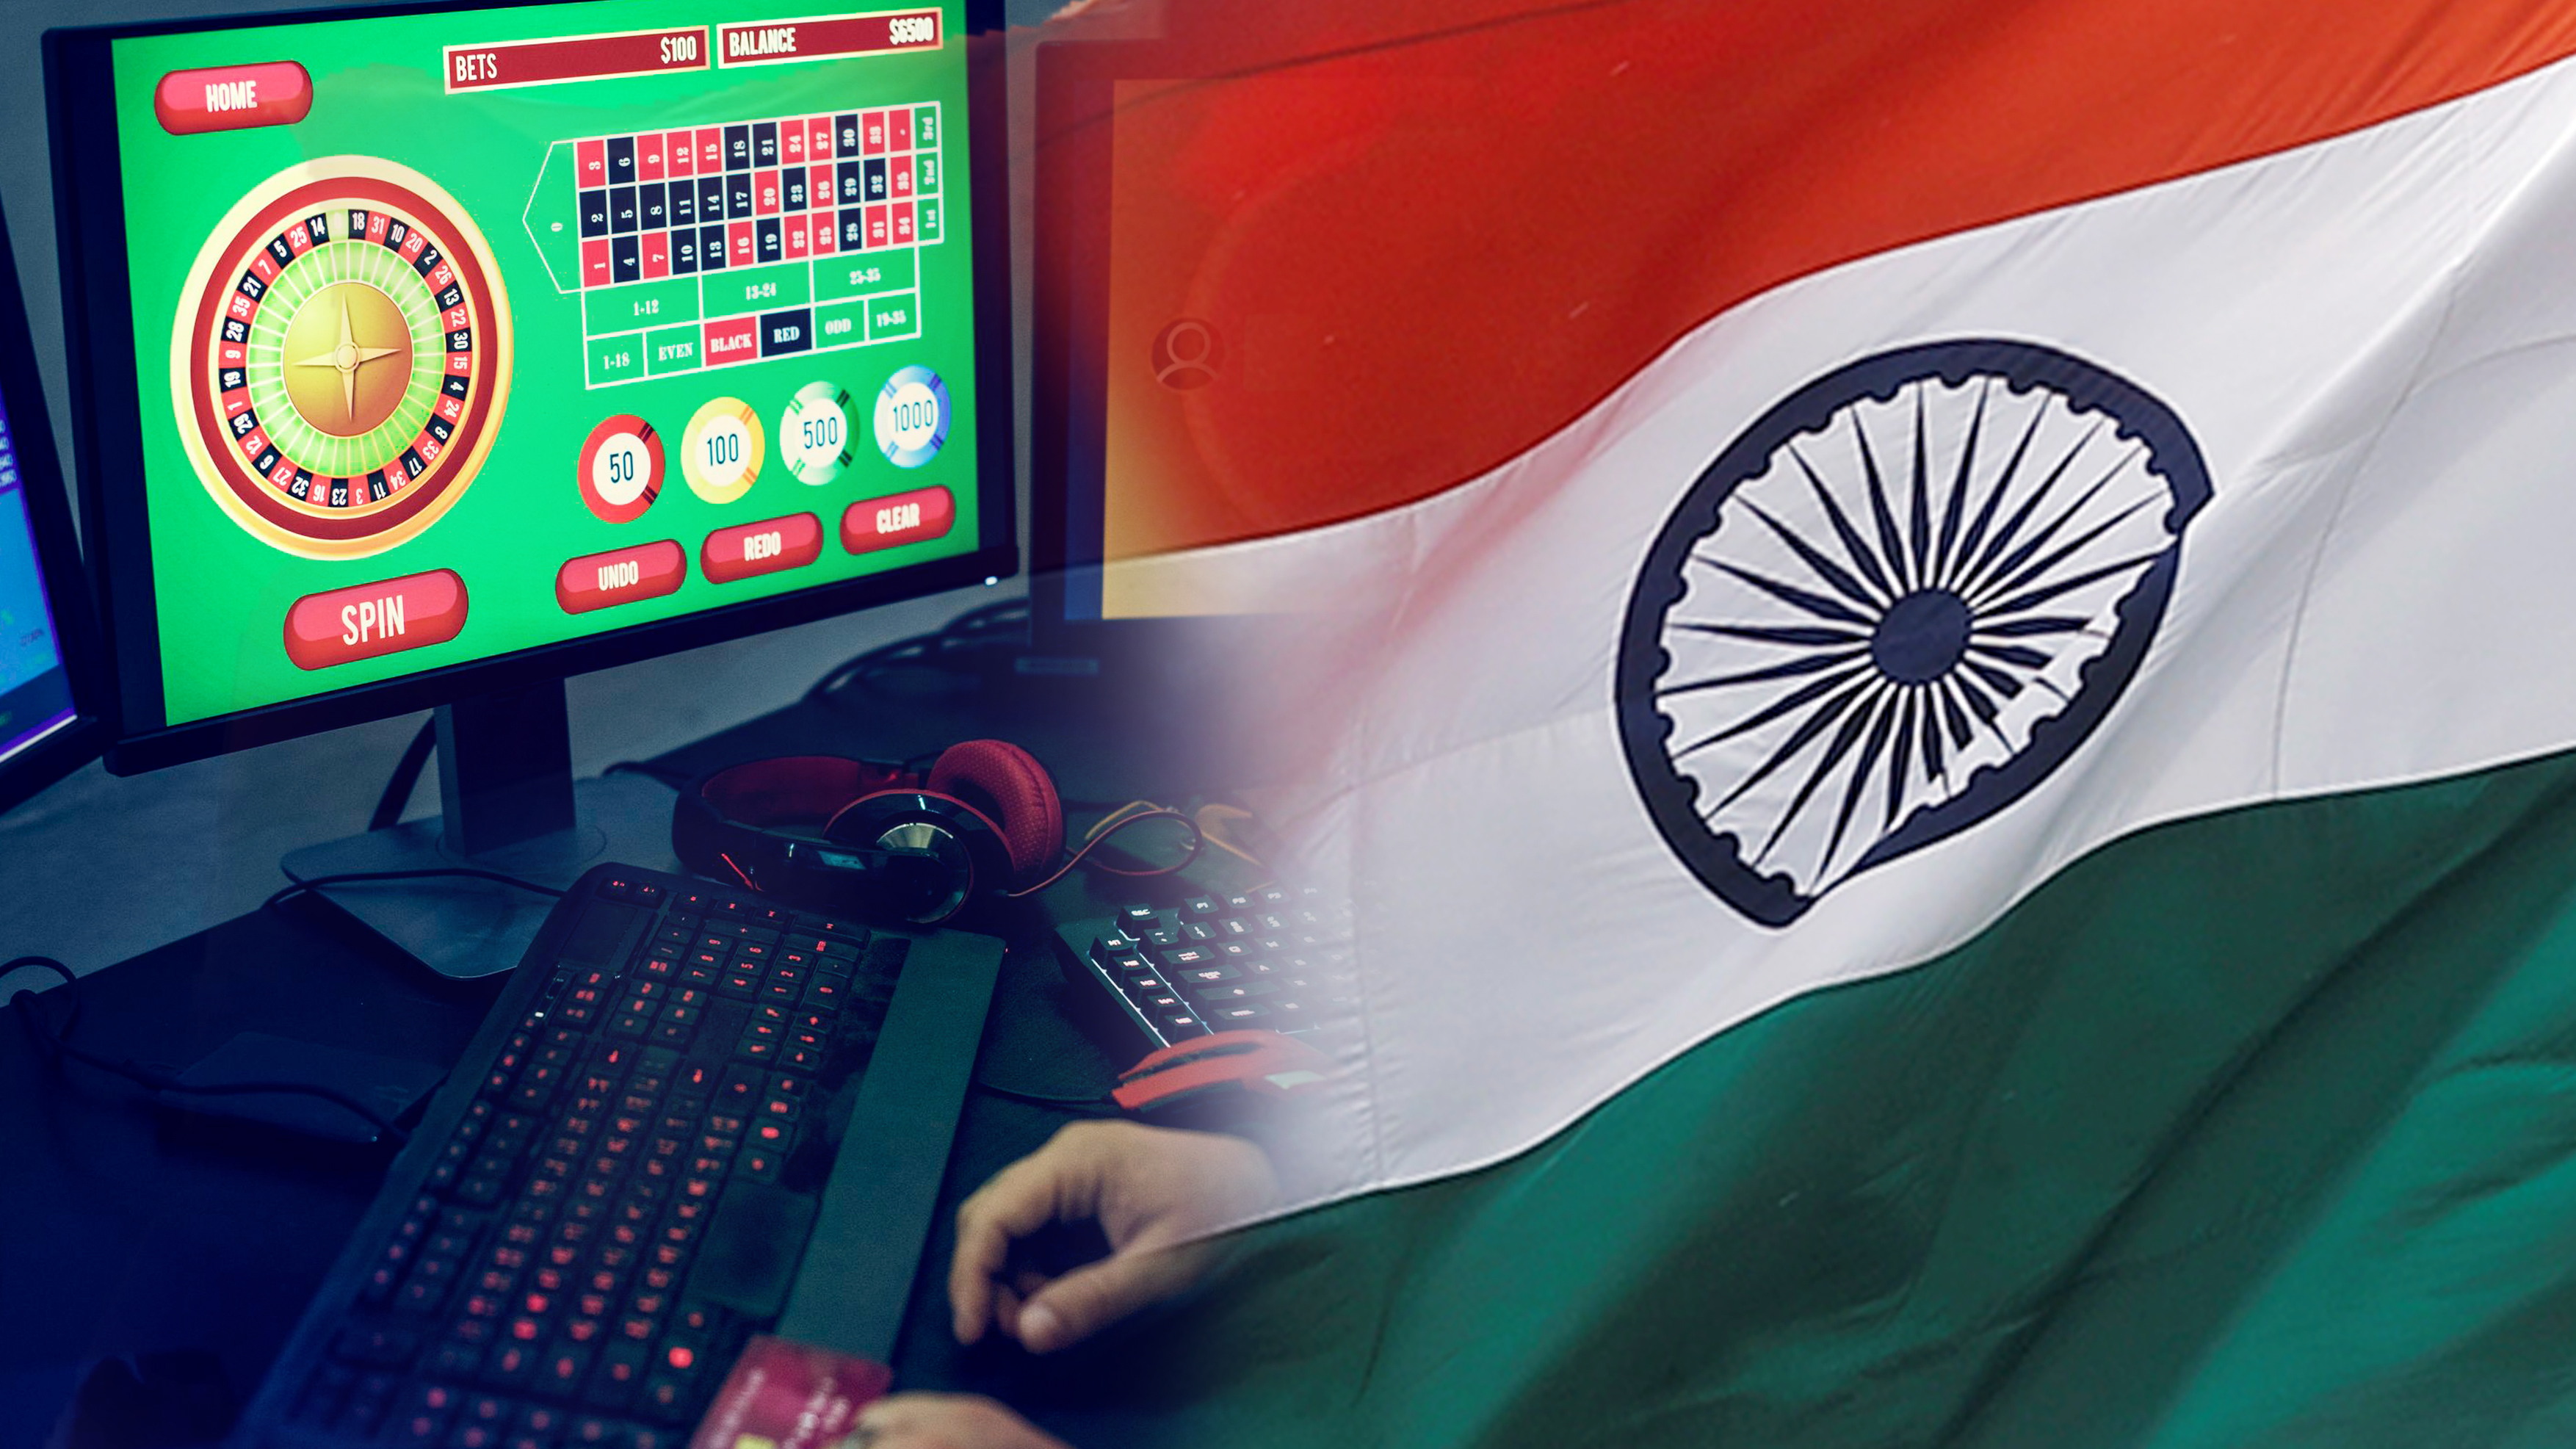 India bet 24